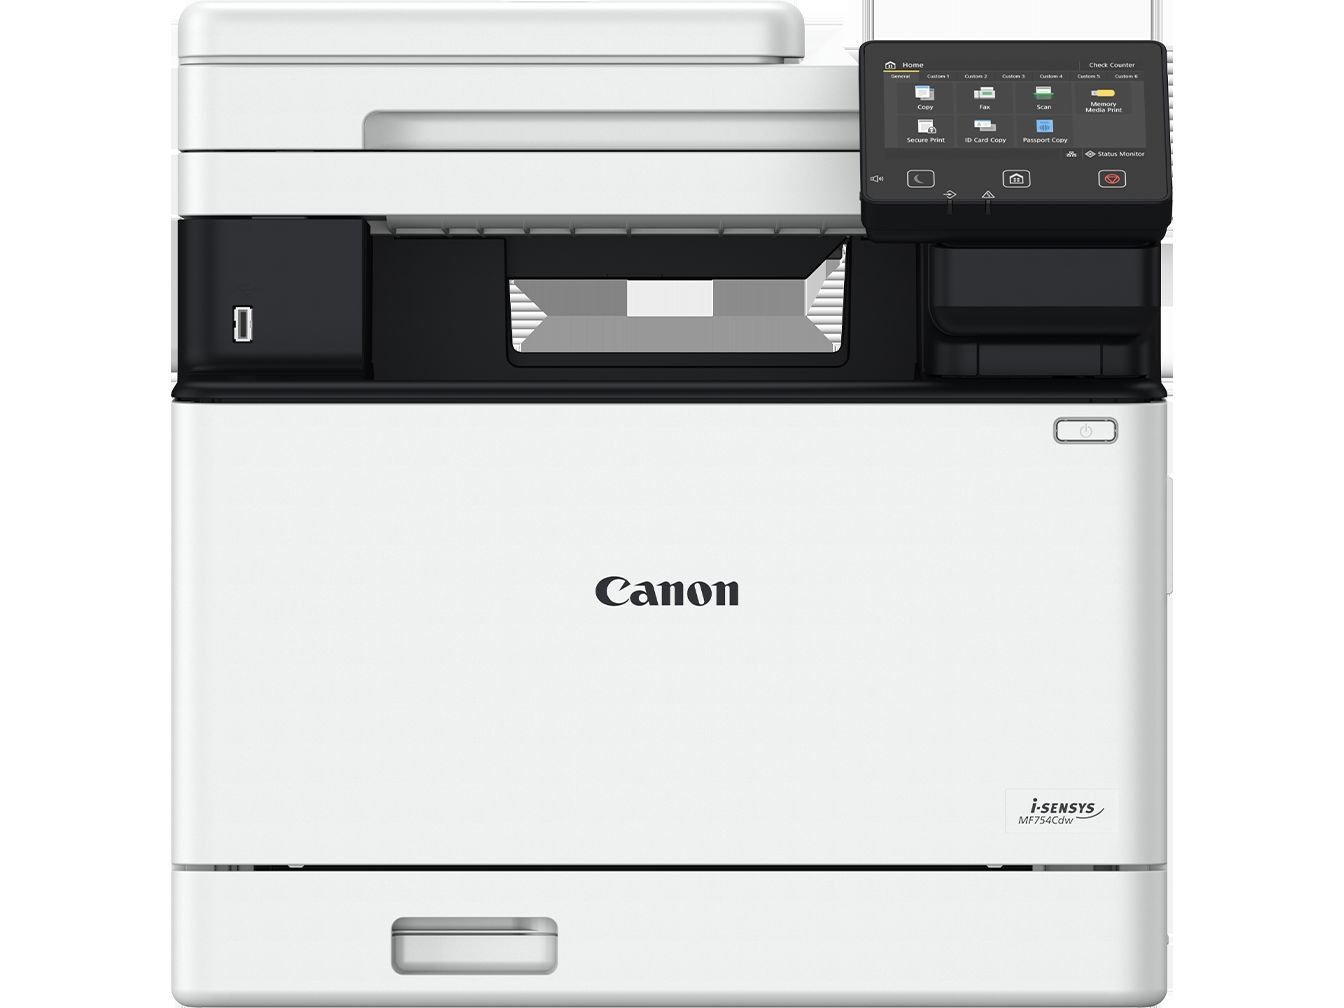 Daugiafunkcis spausdintuvas Canon i-SENSYS MF754Cdw, lazerinis, spalvotas